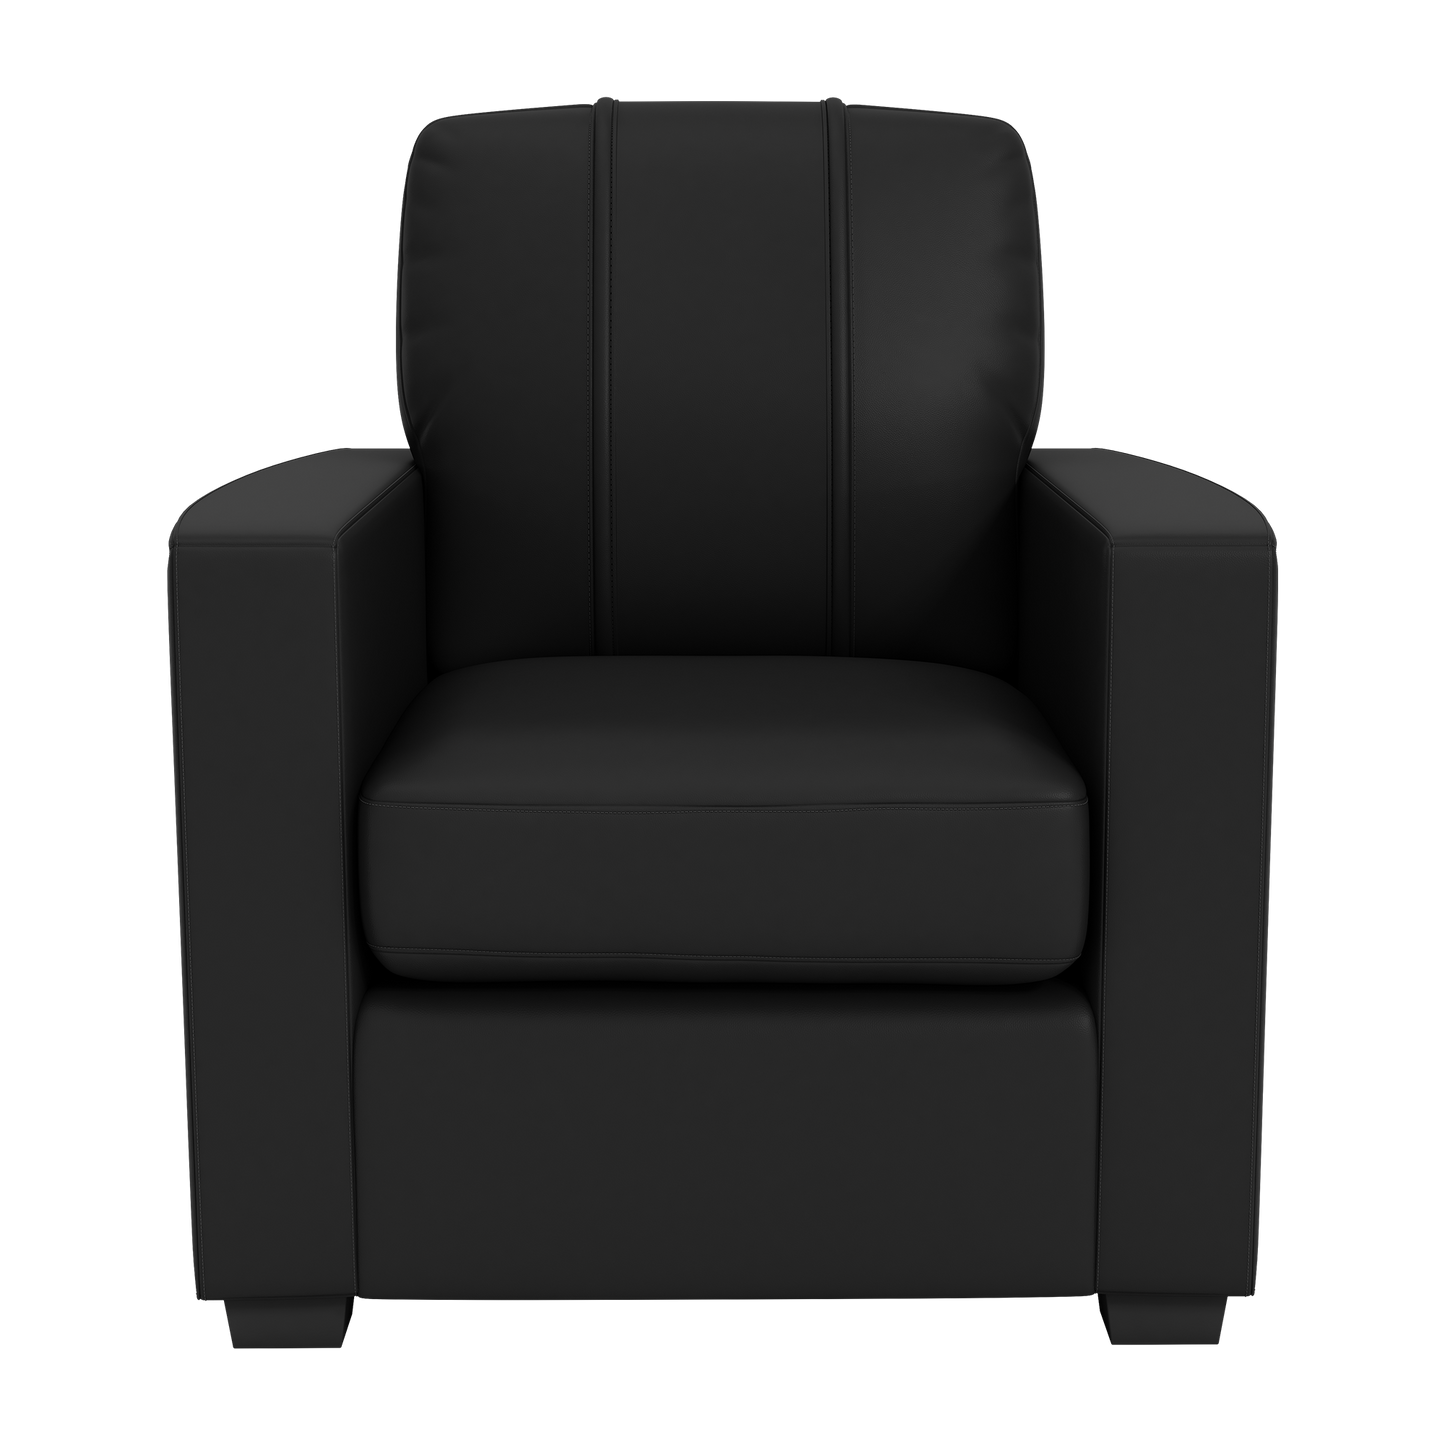 Silver Club Chair with Houston Dynamo Secondary Logo